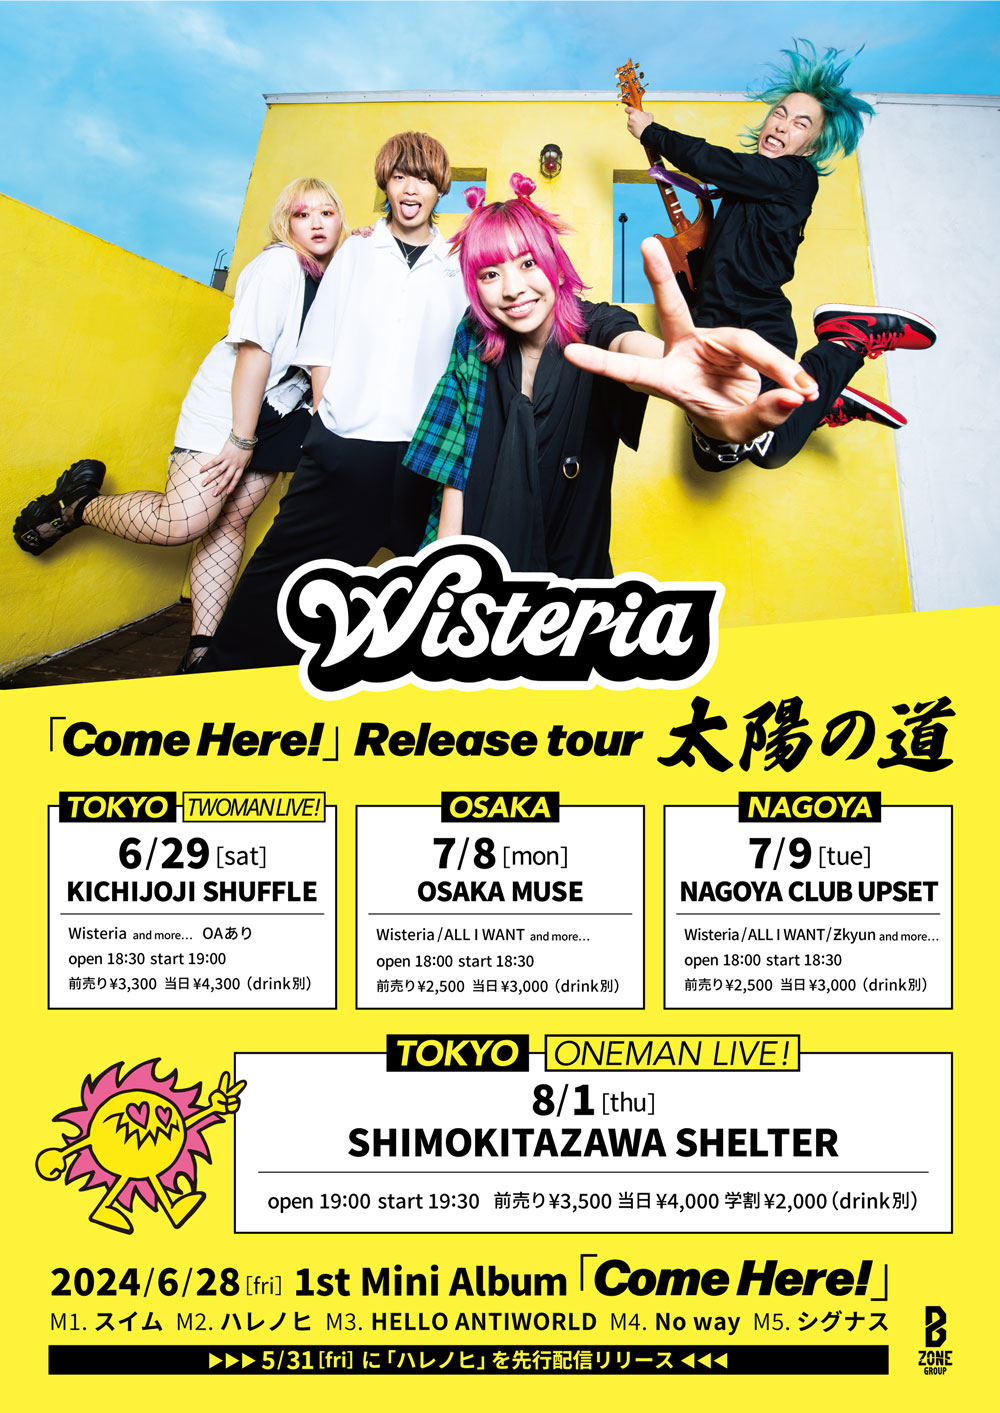 「Come Here!」release tour『太陽の道』【tokyo】2man